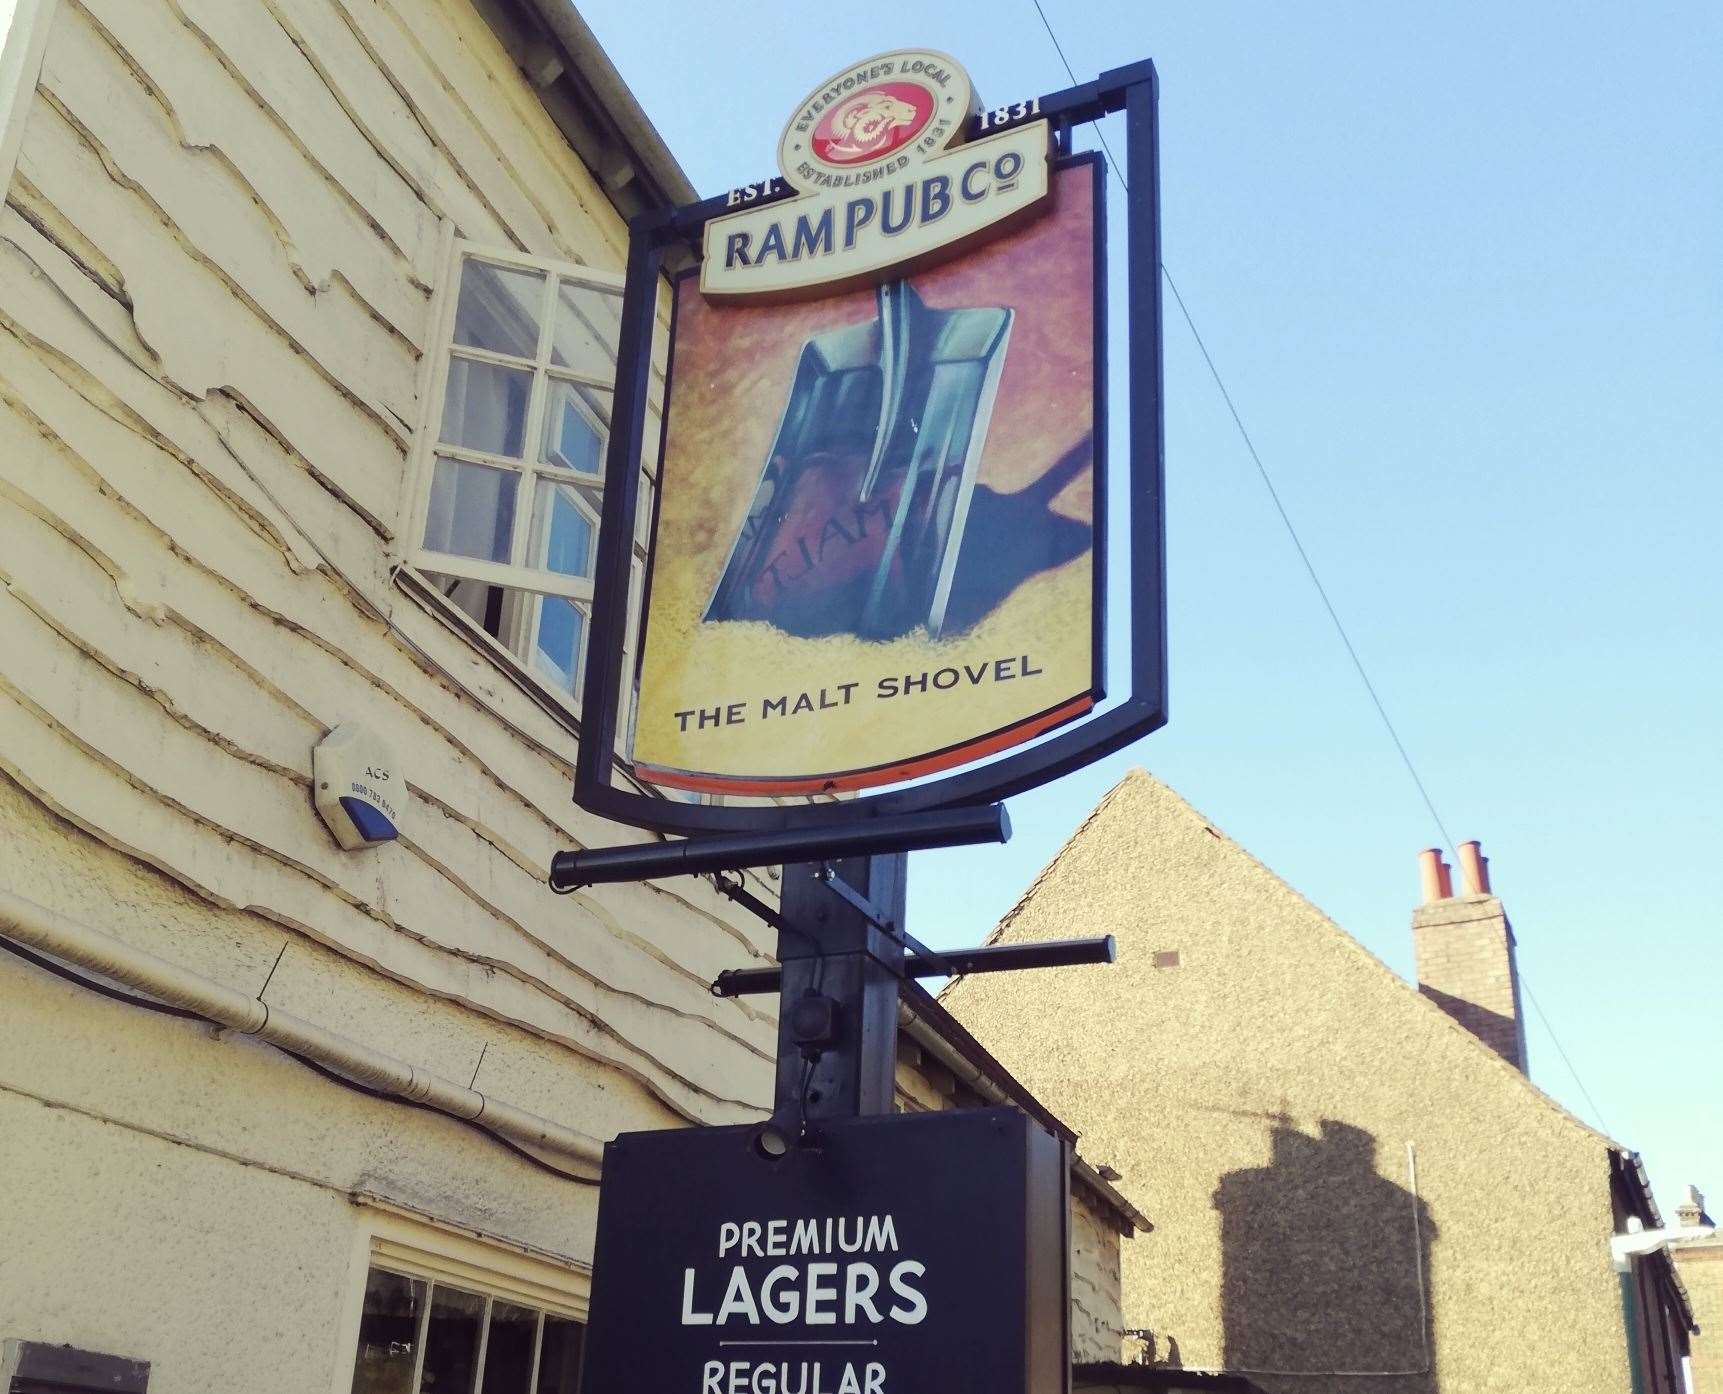 The Malt Shovel pub in Dartford is preparing to reopen